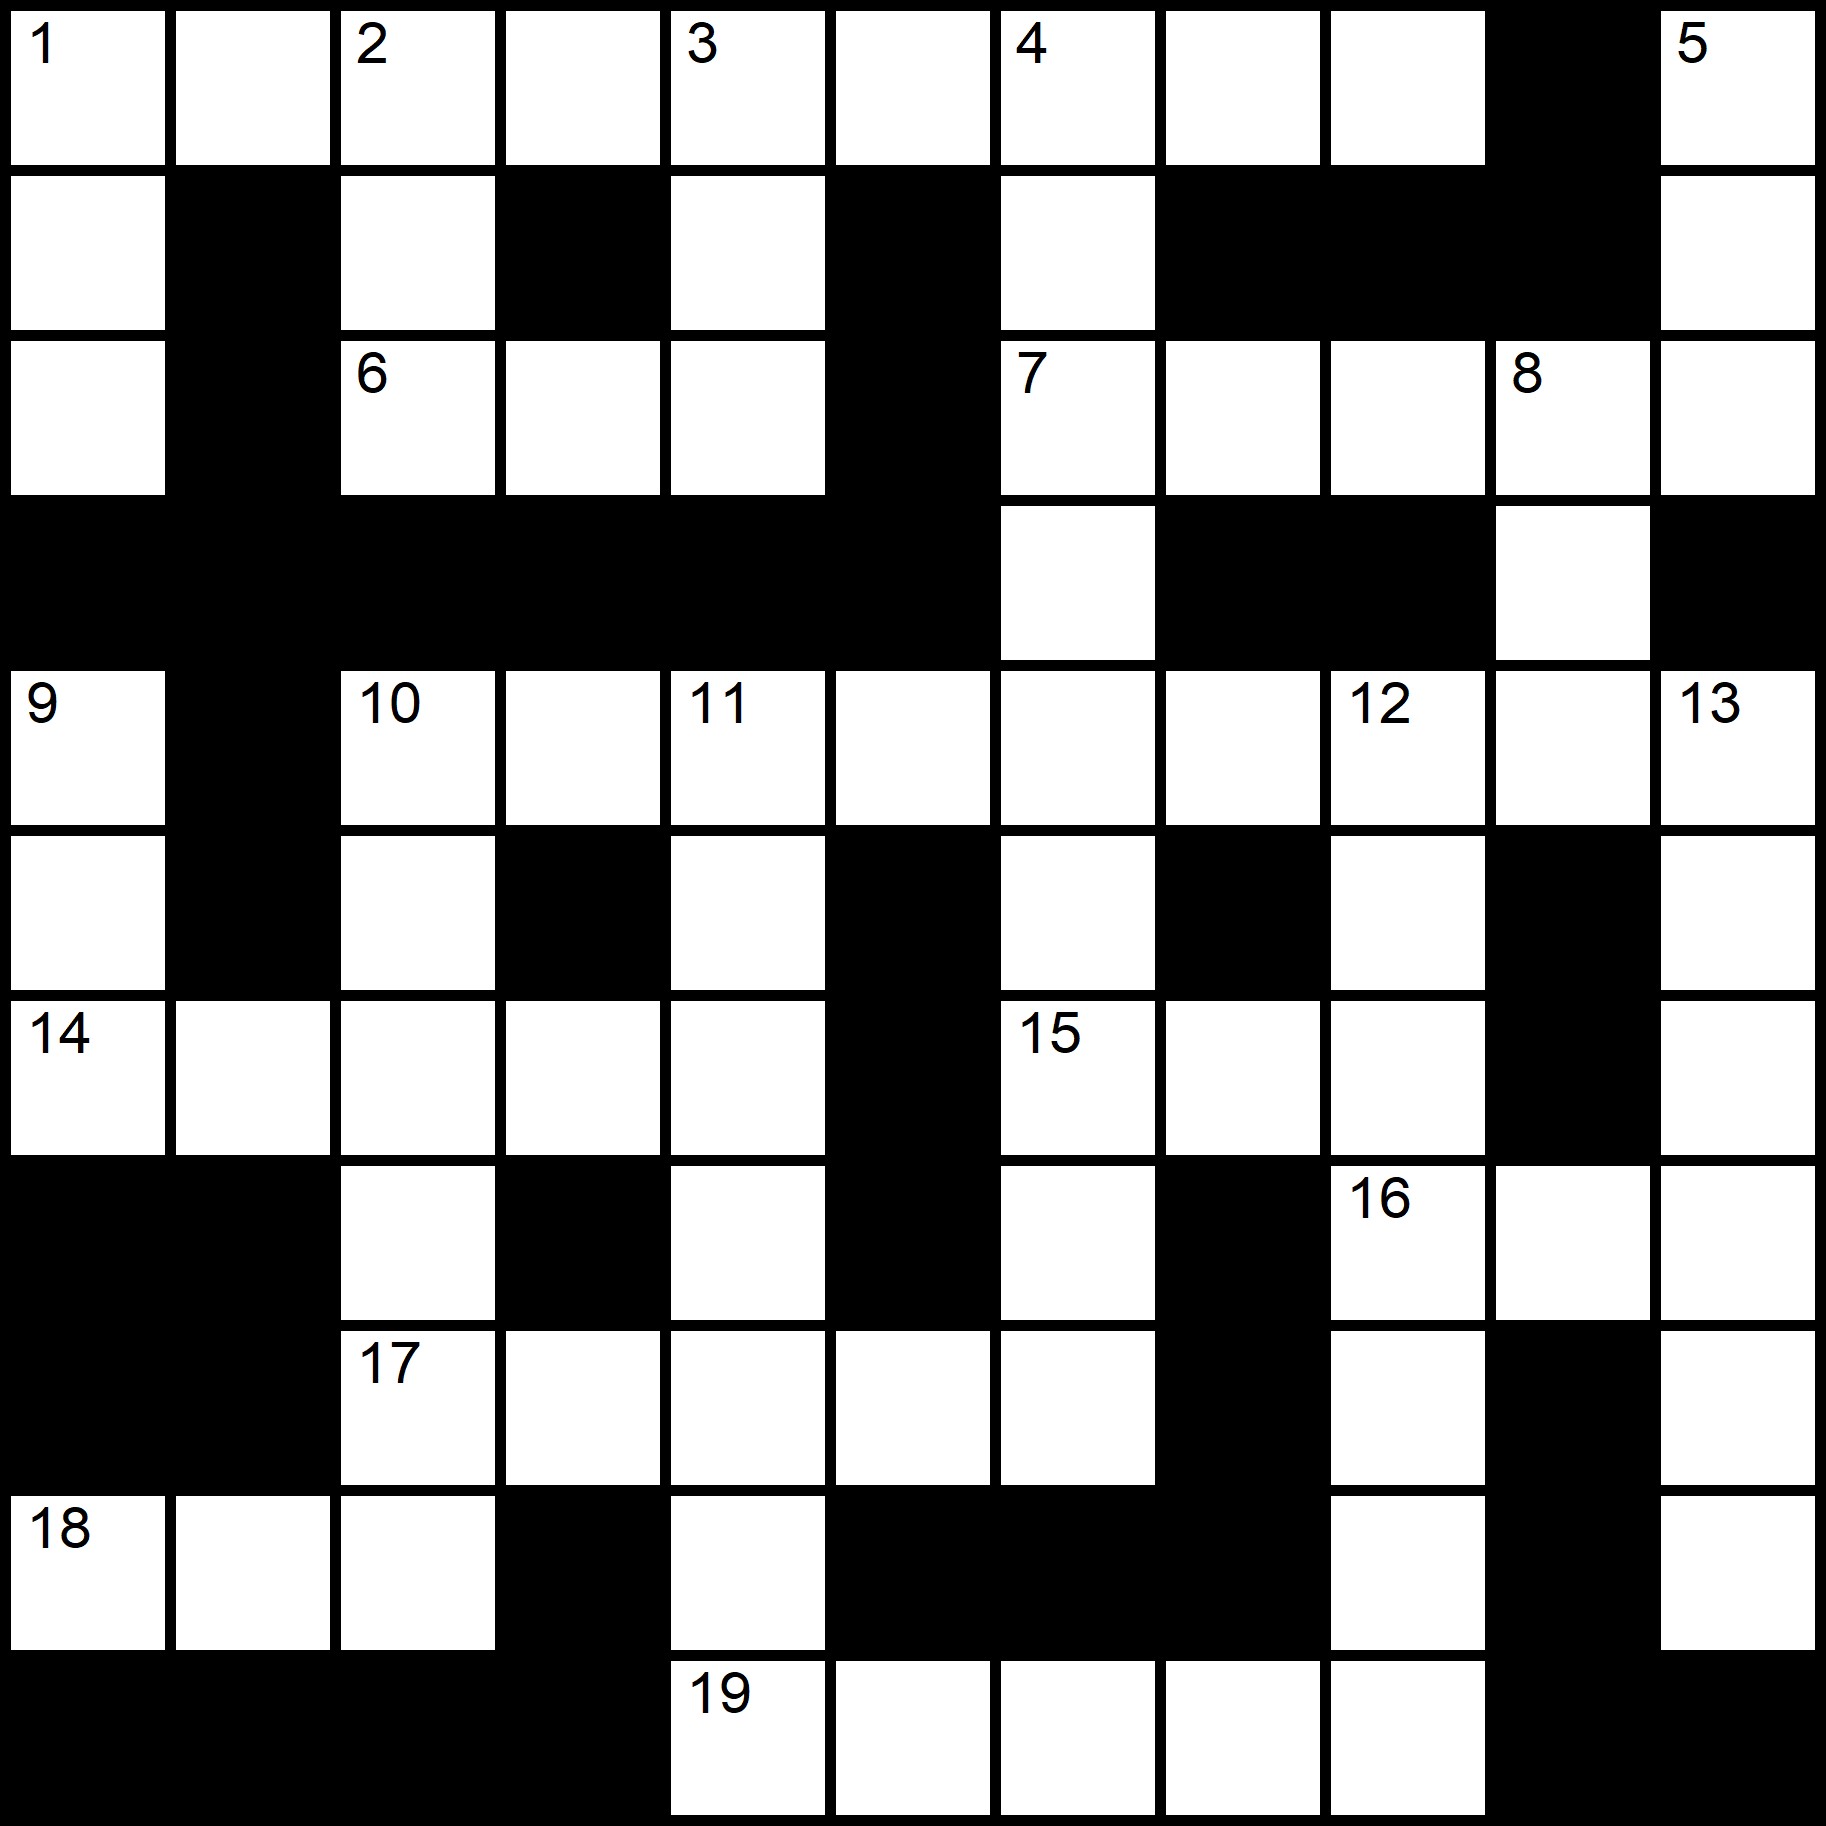 Crosswords PDF Printable -
Placidus Flora - Crossword number seventeen